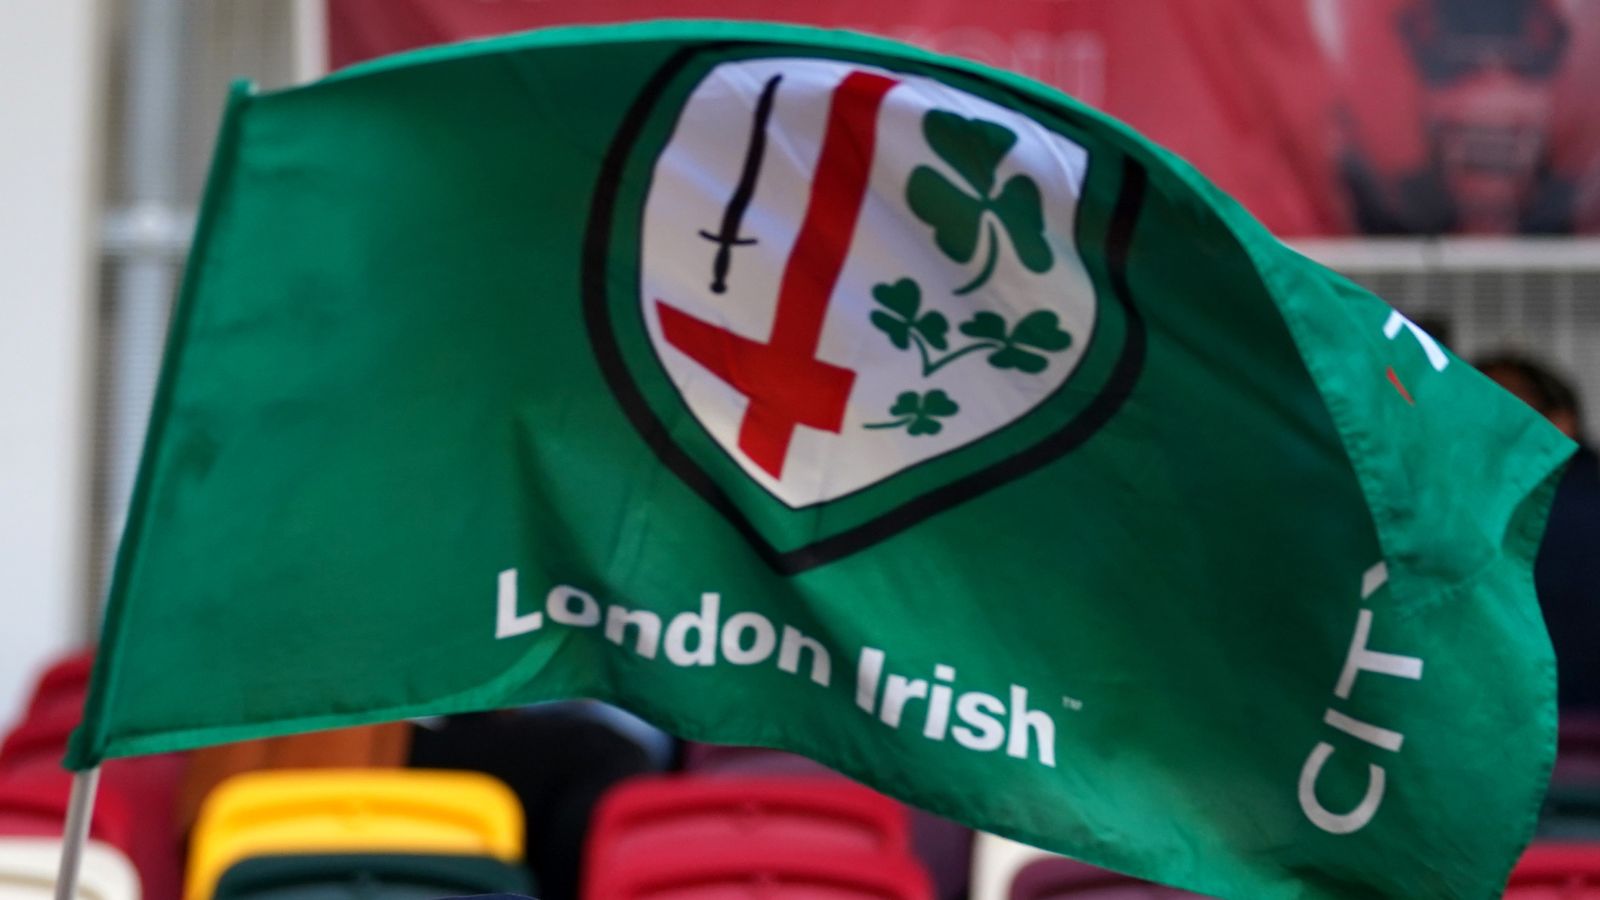 London Irish: Gallagher's Premiership club given a takeover deadline by RFU

